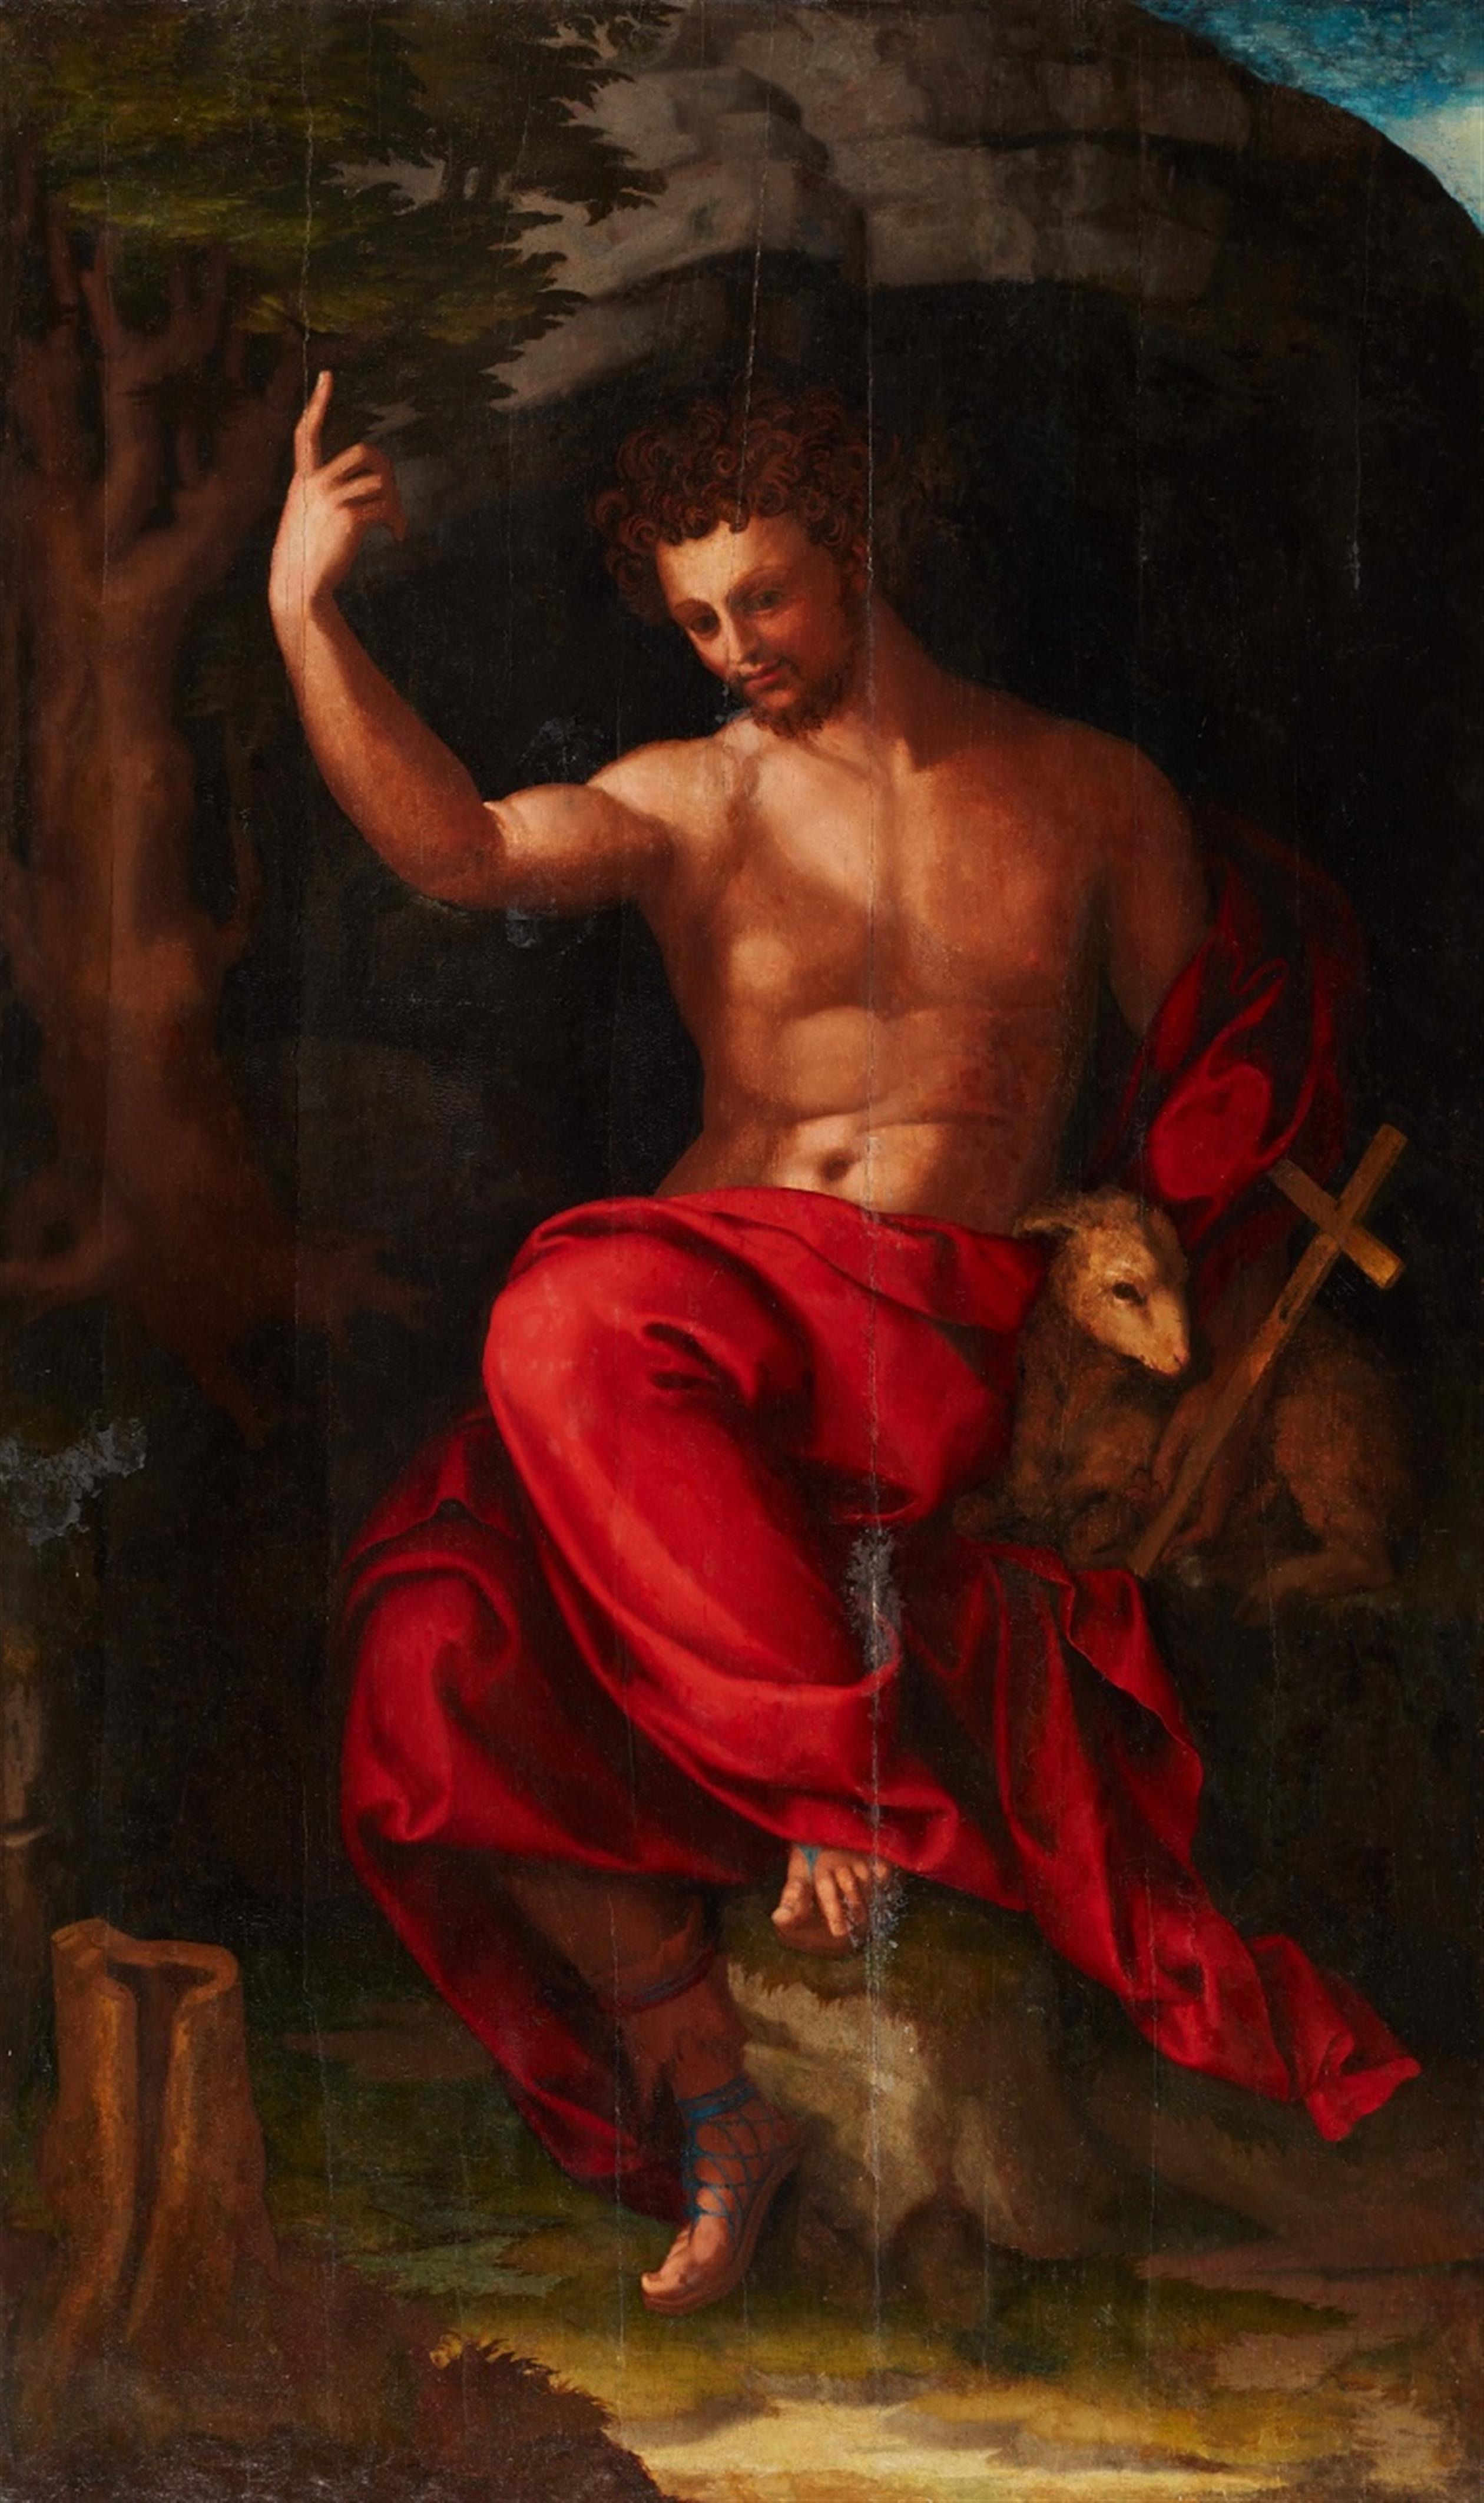 Florentine School 16th century - John the Baptist - image-1